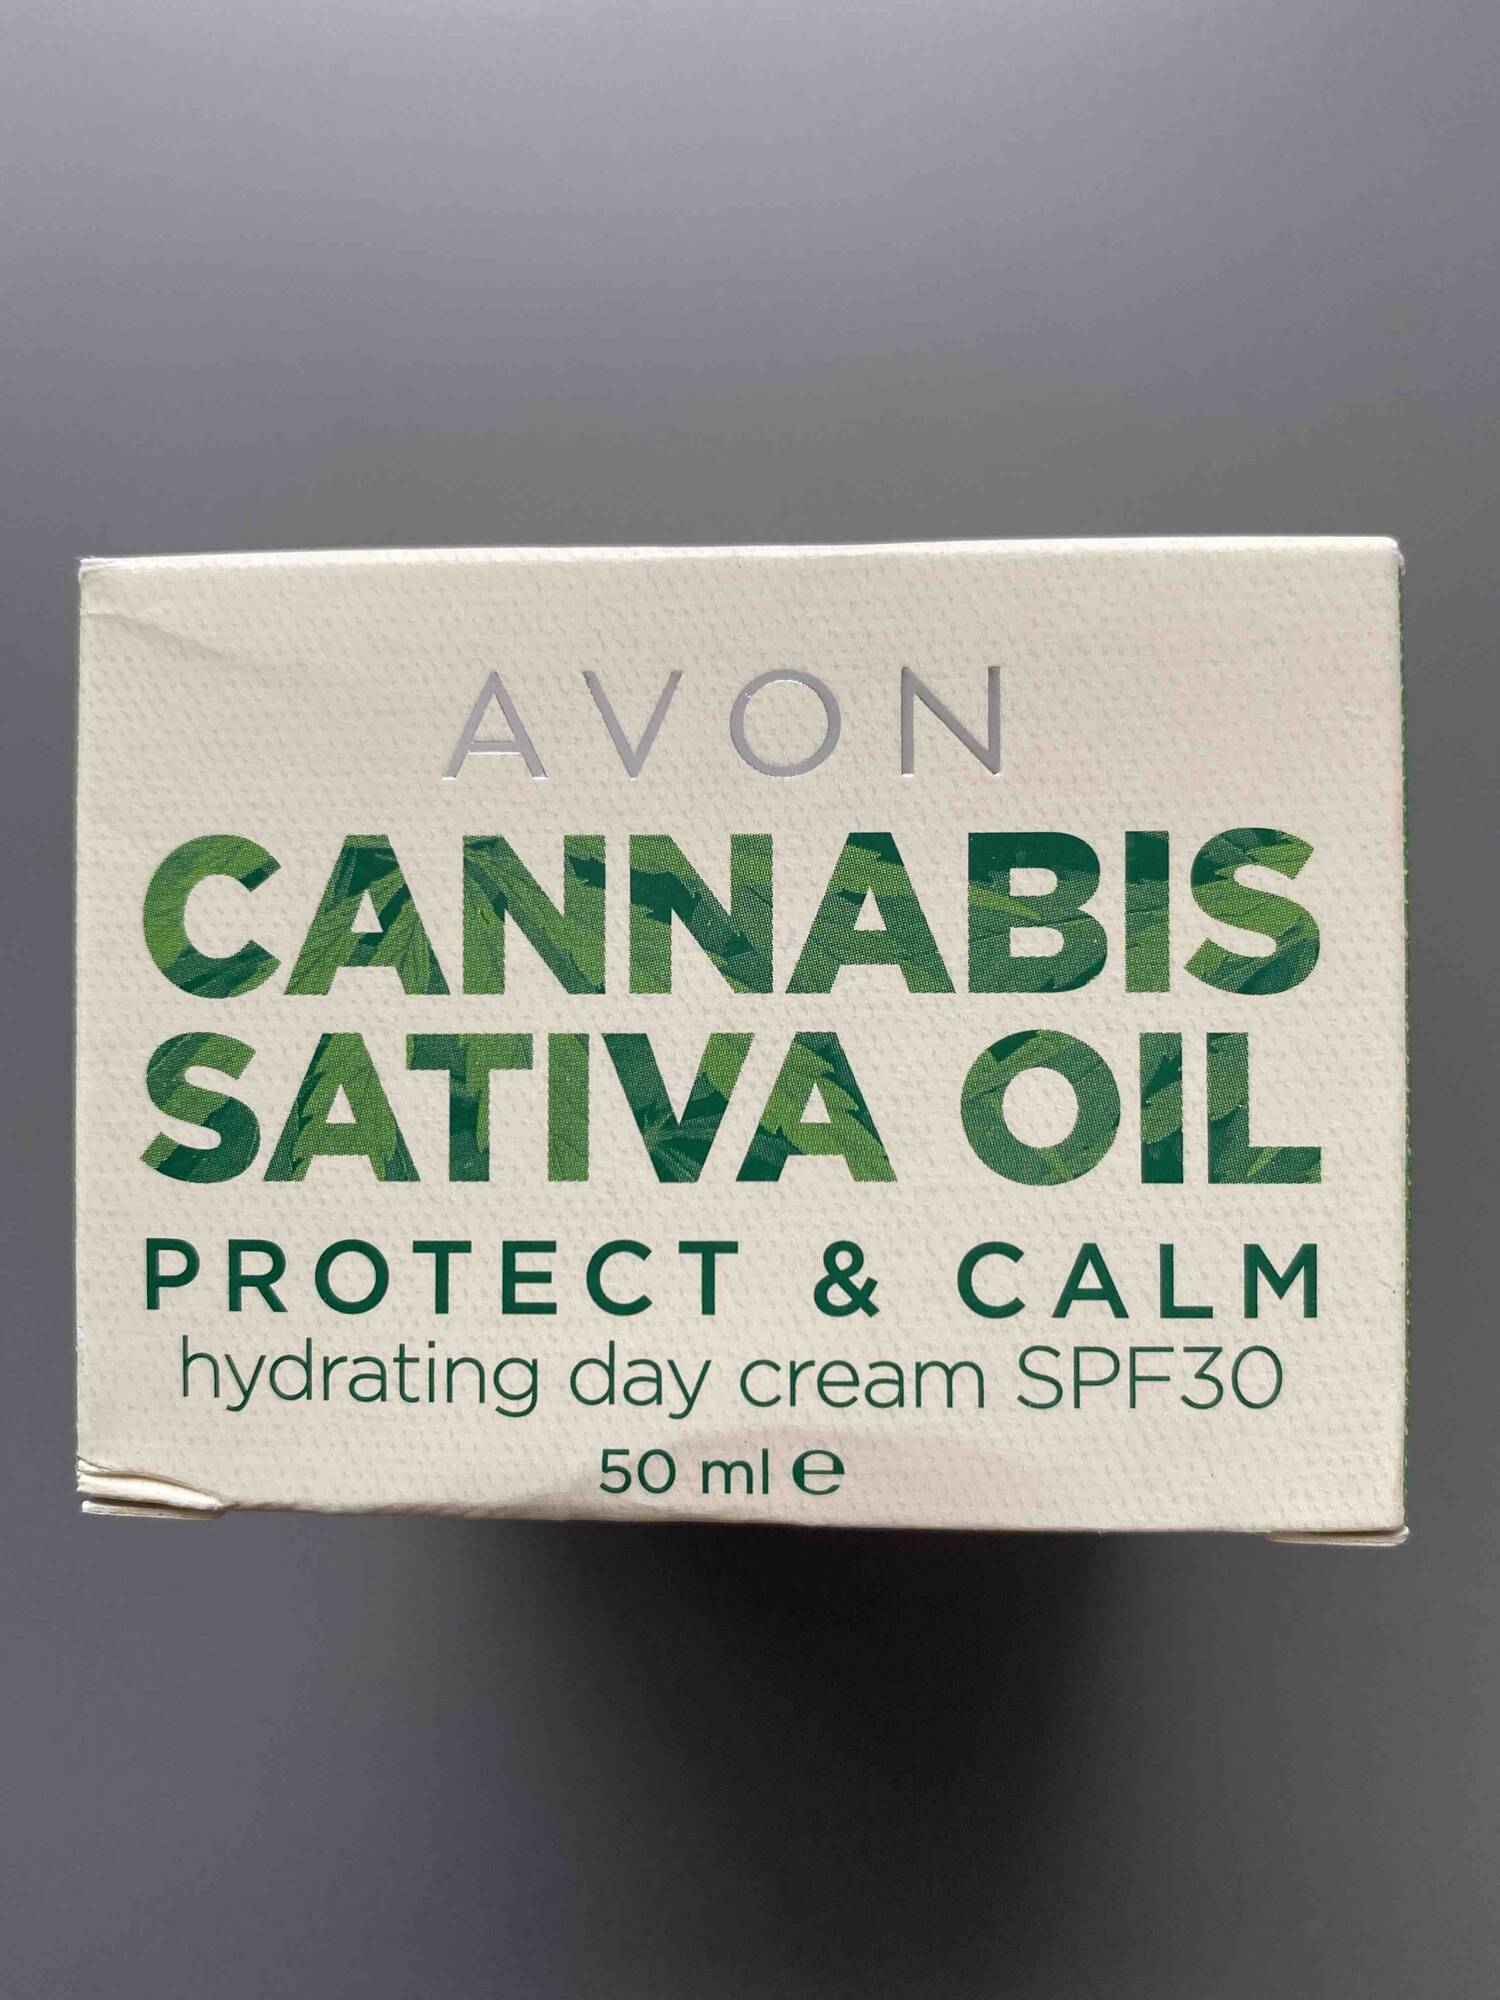 AVON - Cannabis sativa oil - Hydrating day cream SPF30